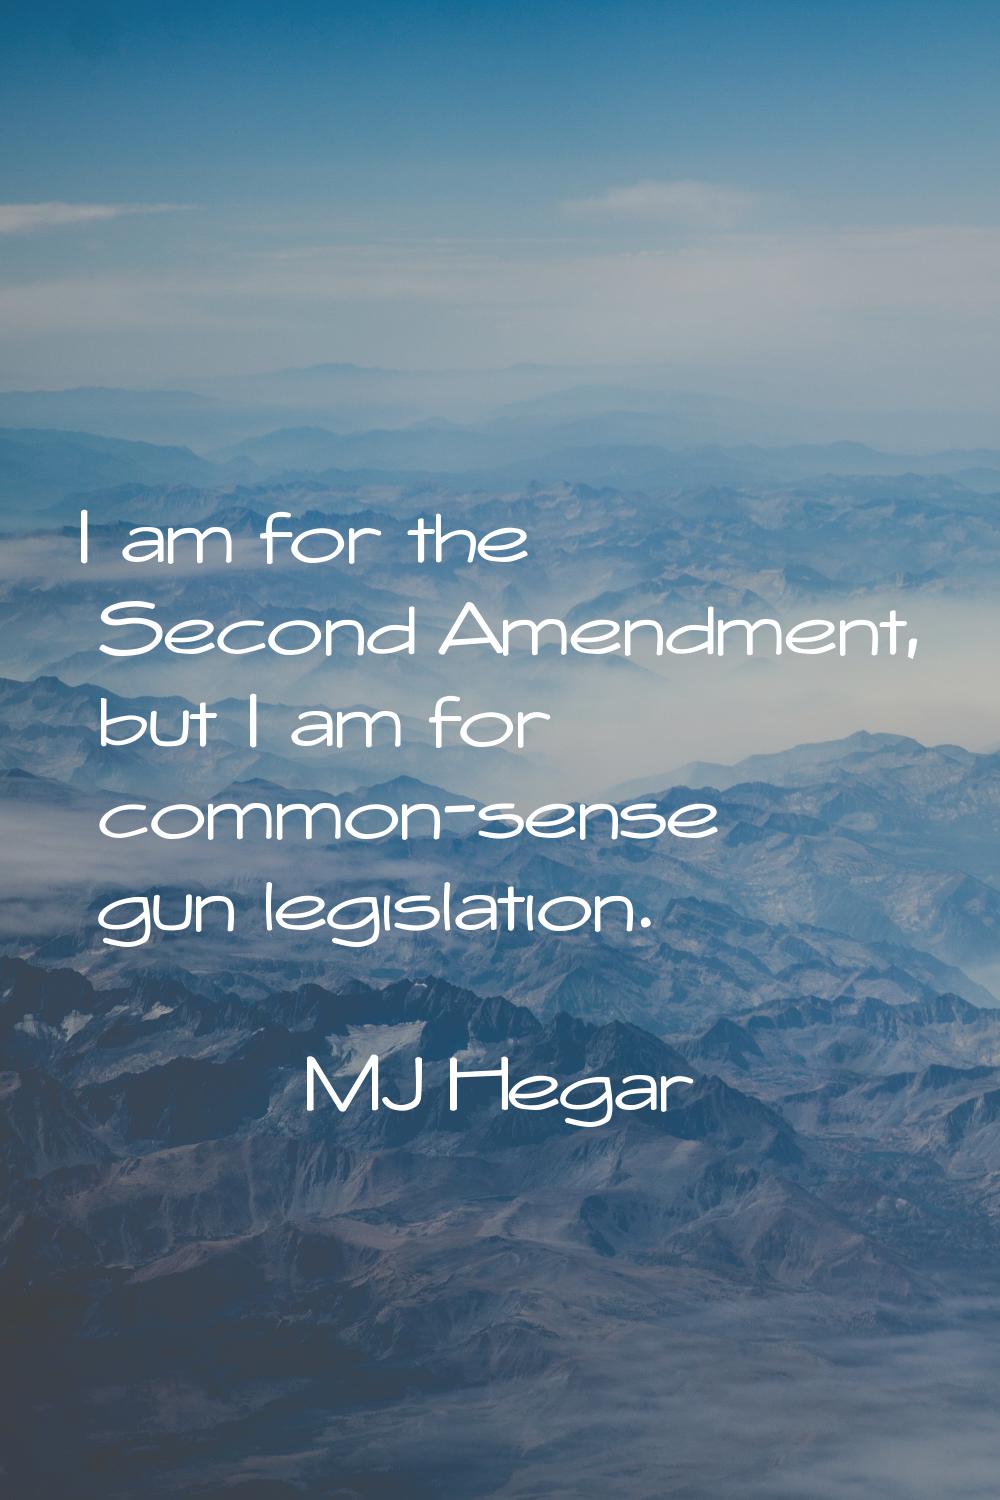 I am for the Second Amendment, but I am for common-sense gun legislation.